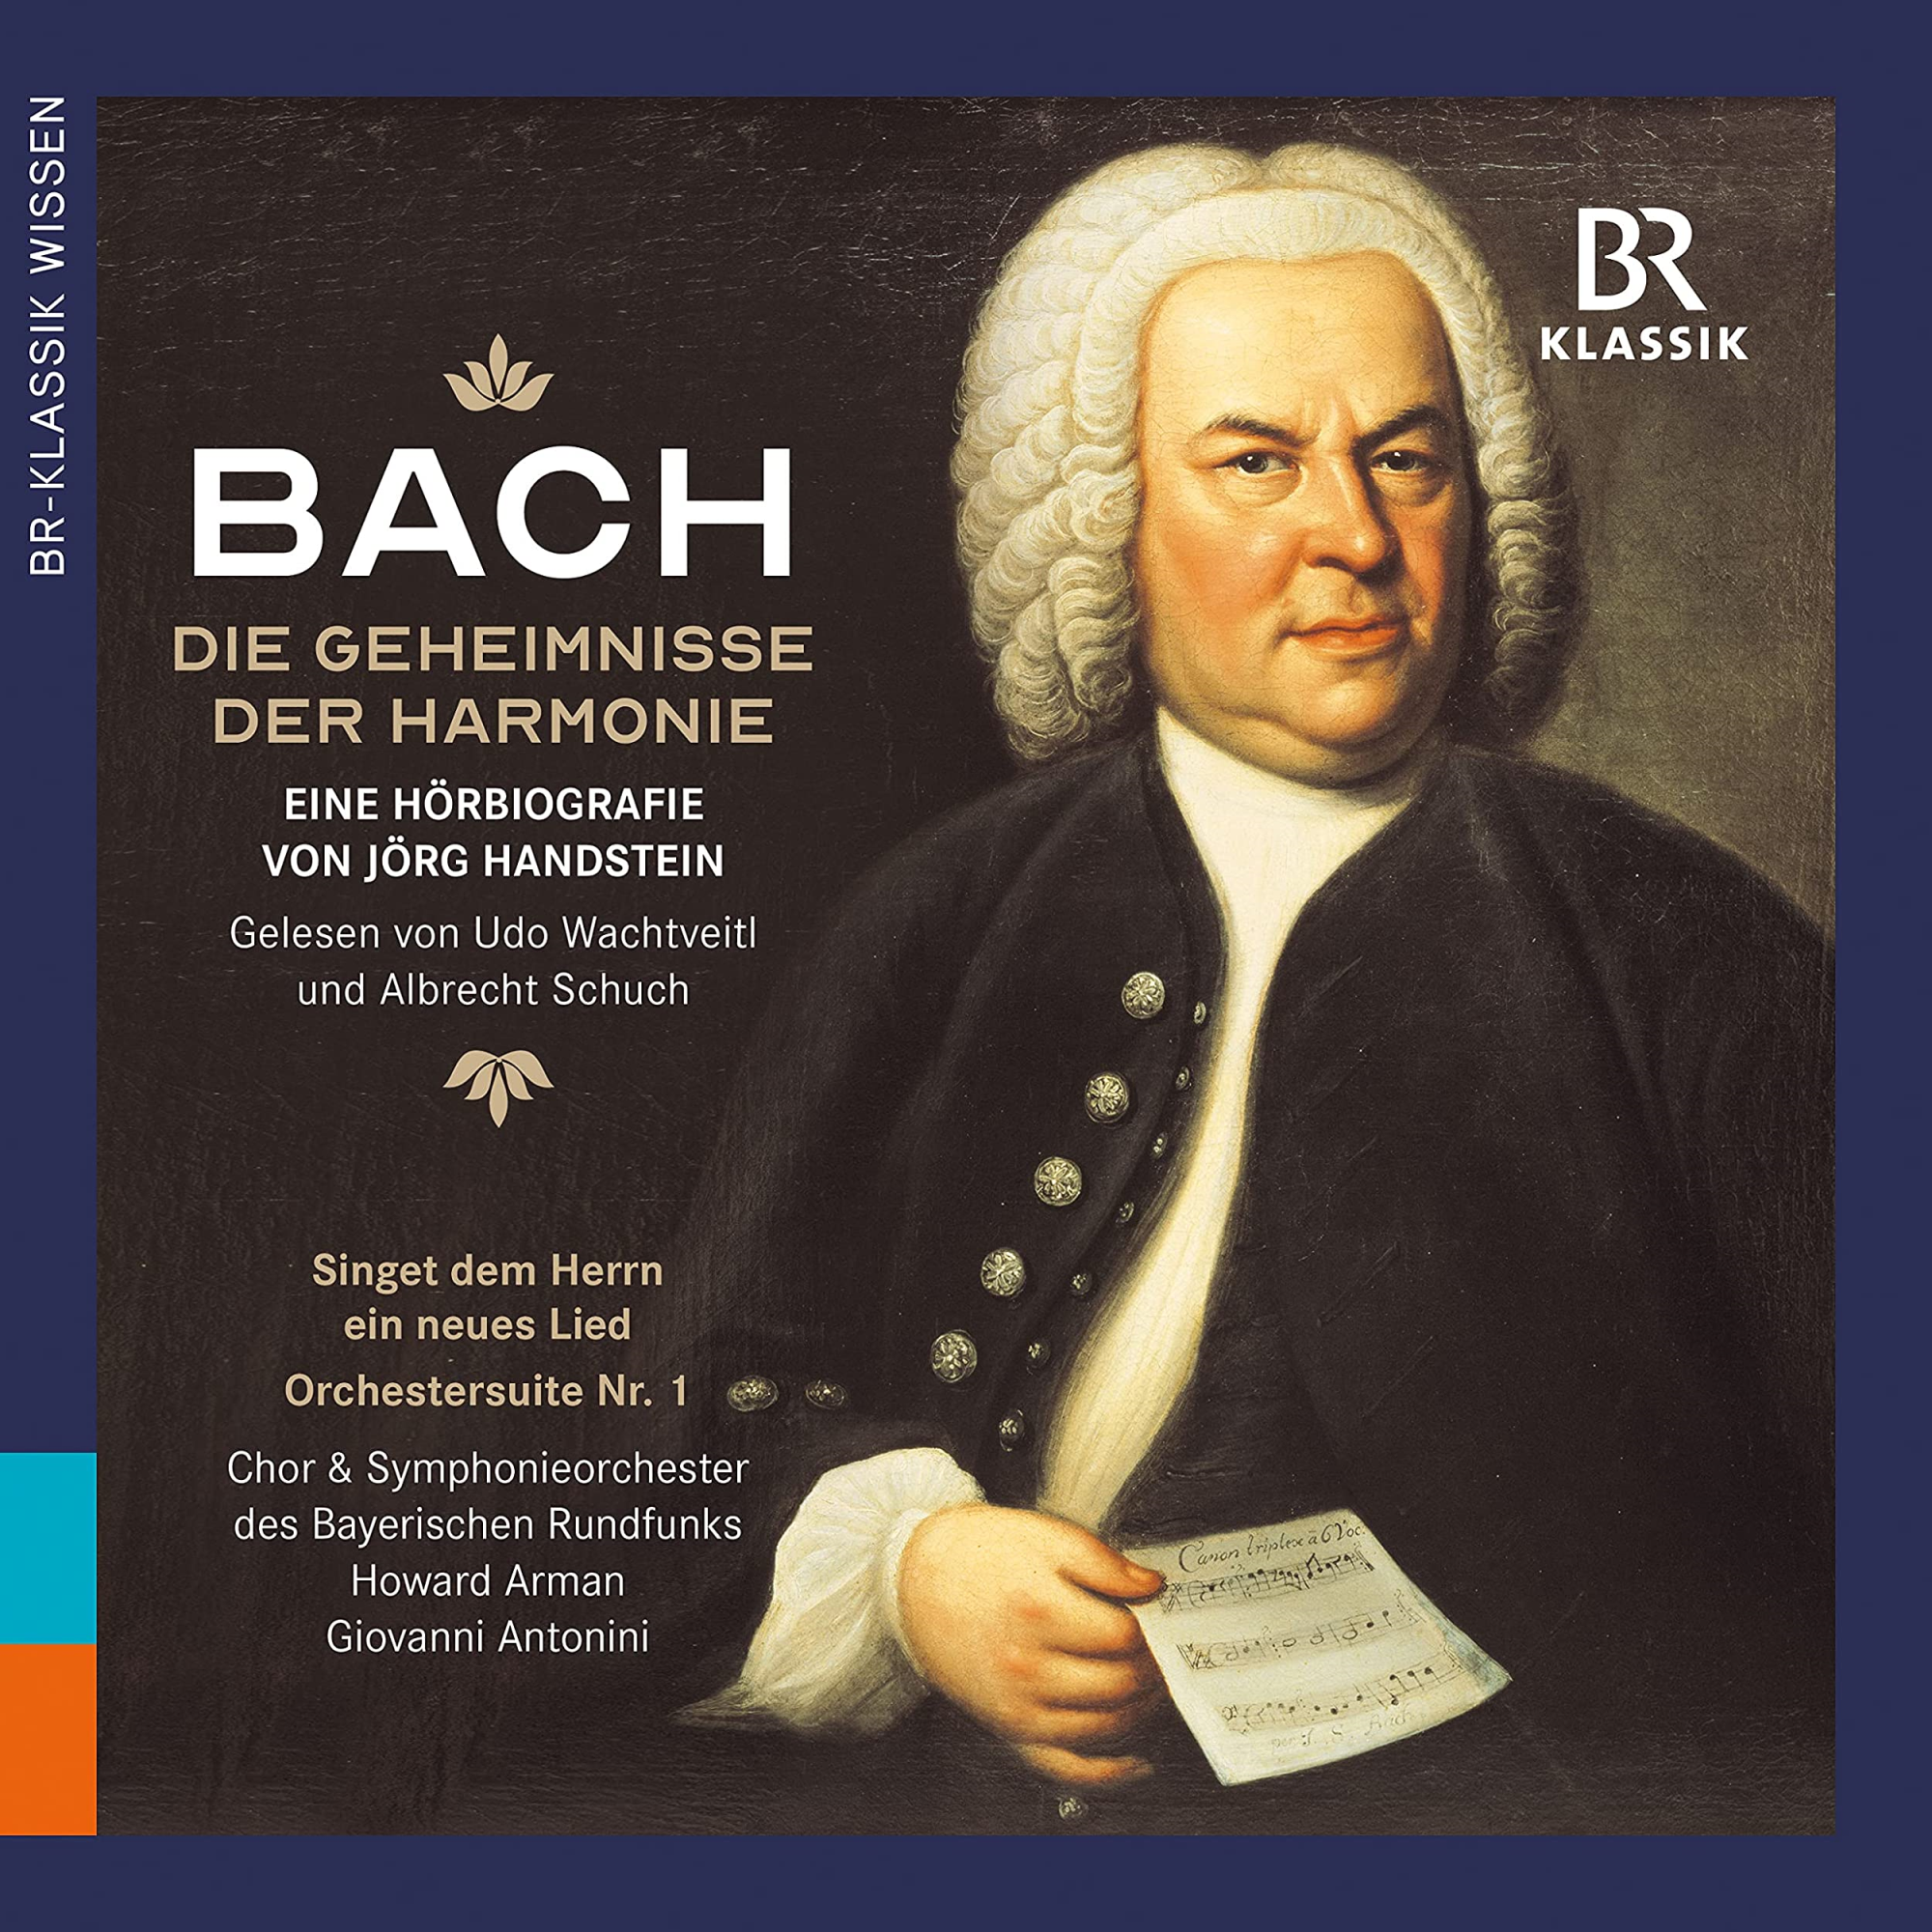 Audio Cd Johann Sebastian Bach - Die Geheimnisse Der Harmonie - Eine Horbiografie (4 Cd) NUOVO SIGILLATO, EDIZIONE DEL 14/03/2023 SUBITO DISPONIBILE